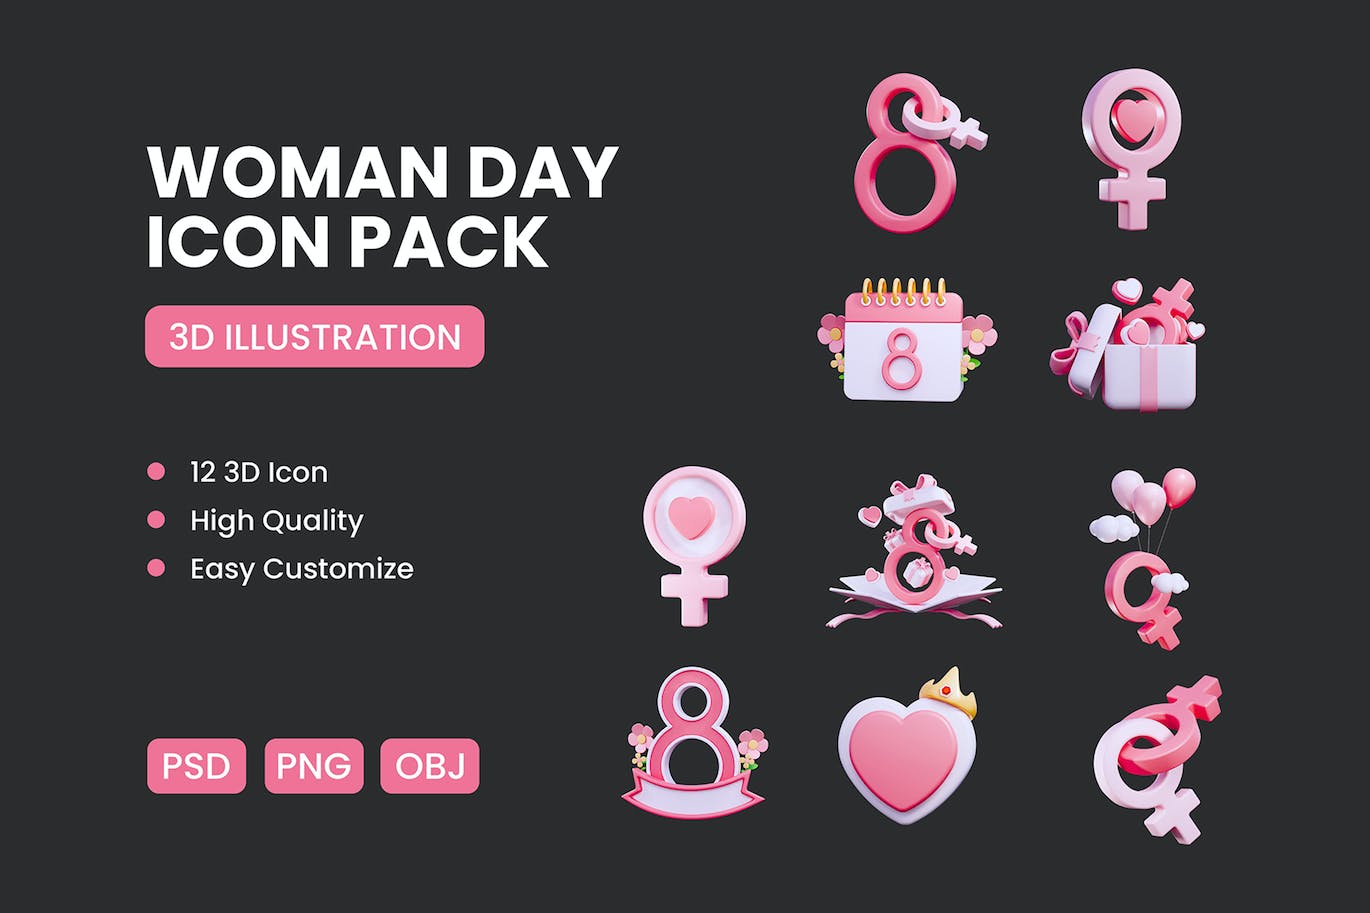 妇女节3D图标包 Woman Day 3D Icon Pack 图标素材 第1张